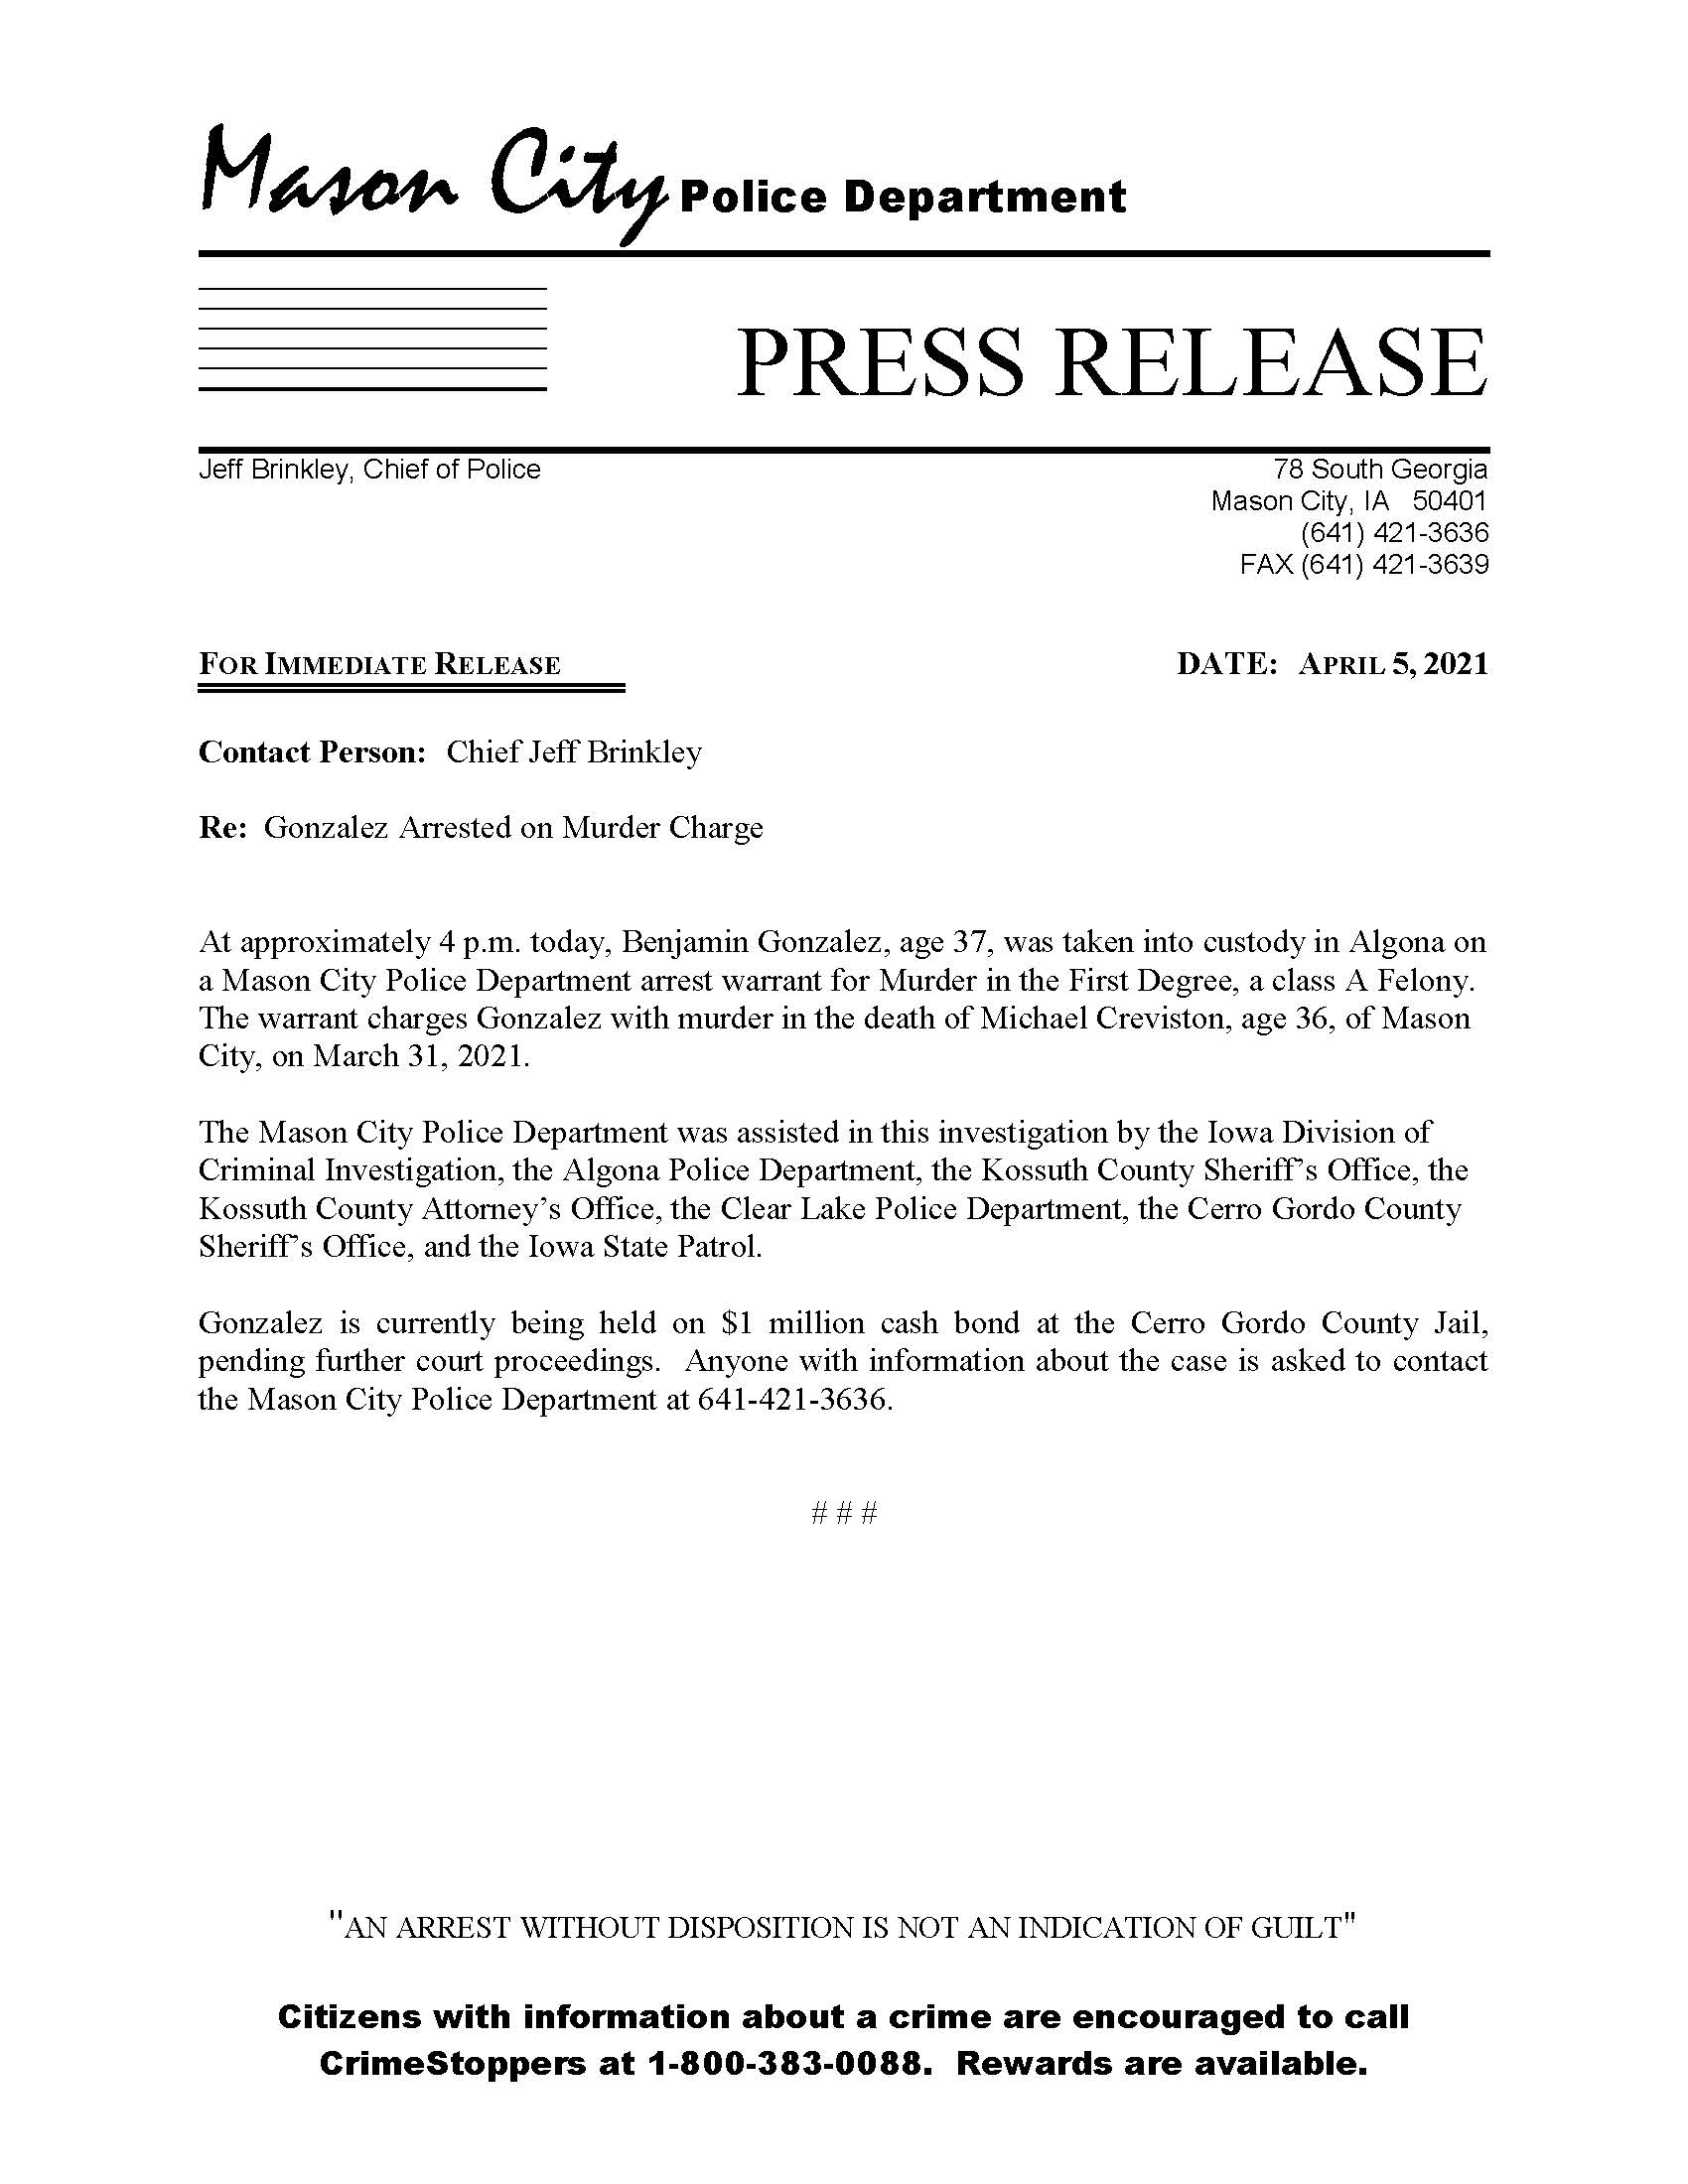 Link to Mason City Press Release